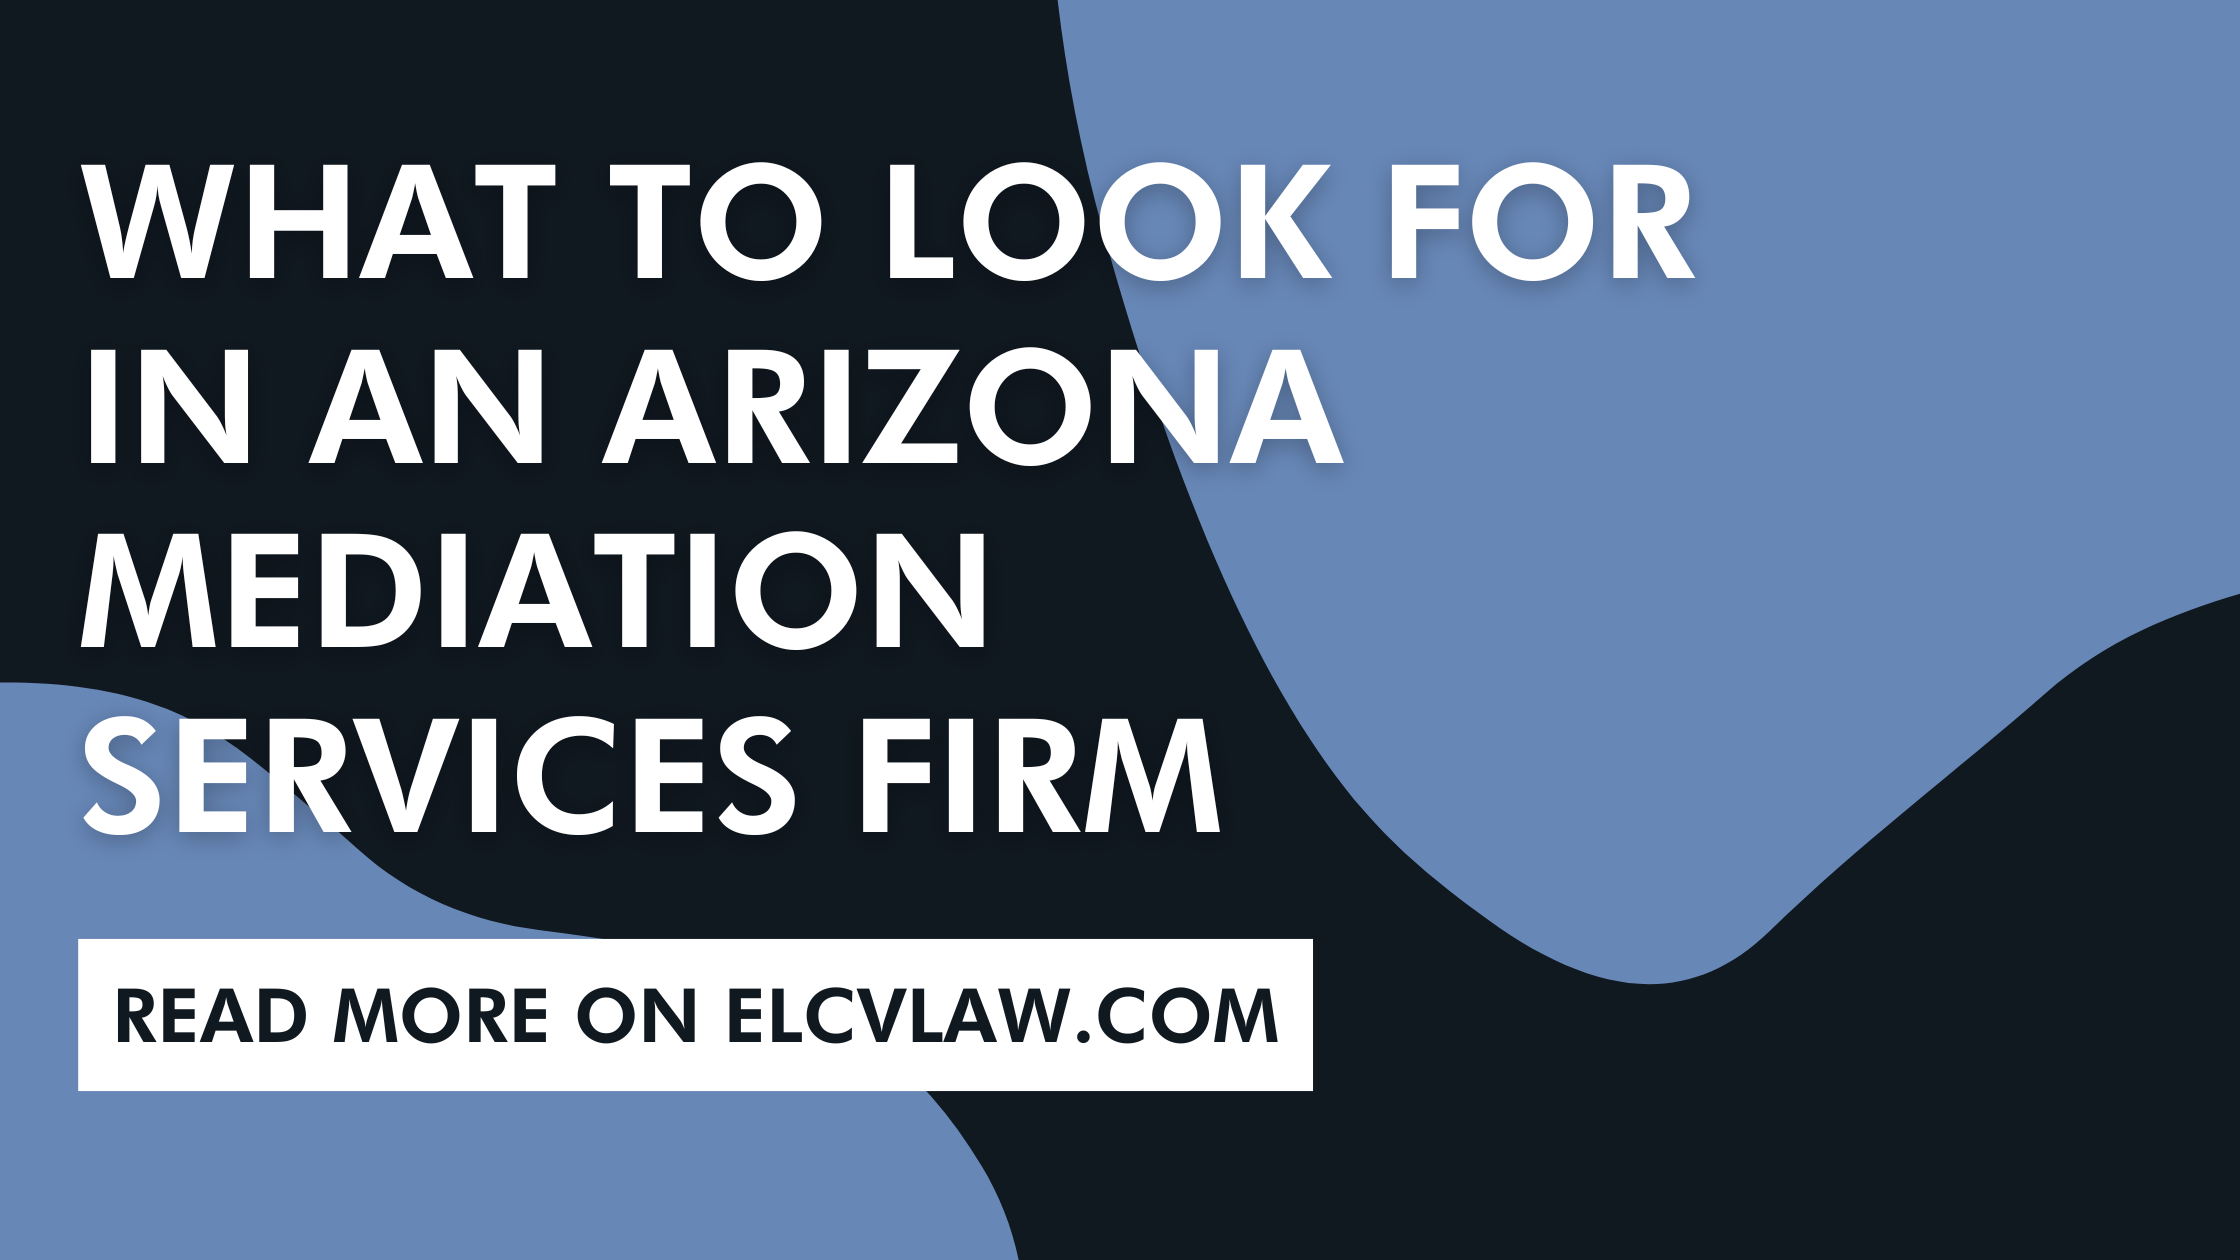 Arizona Mediation Services Firm